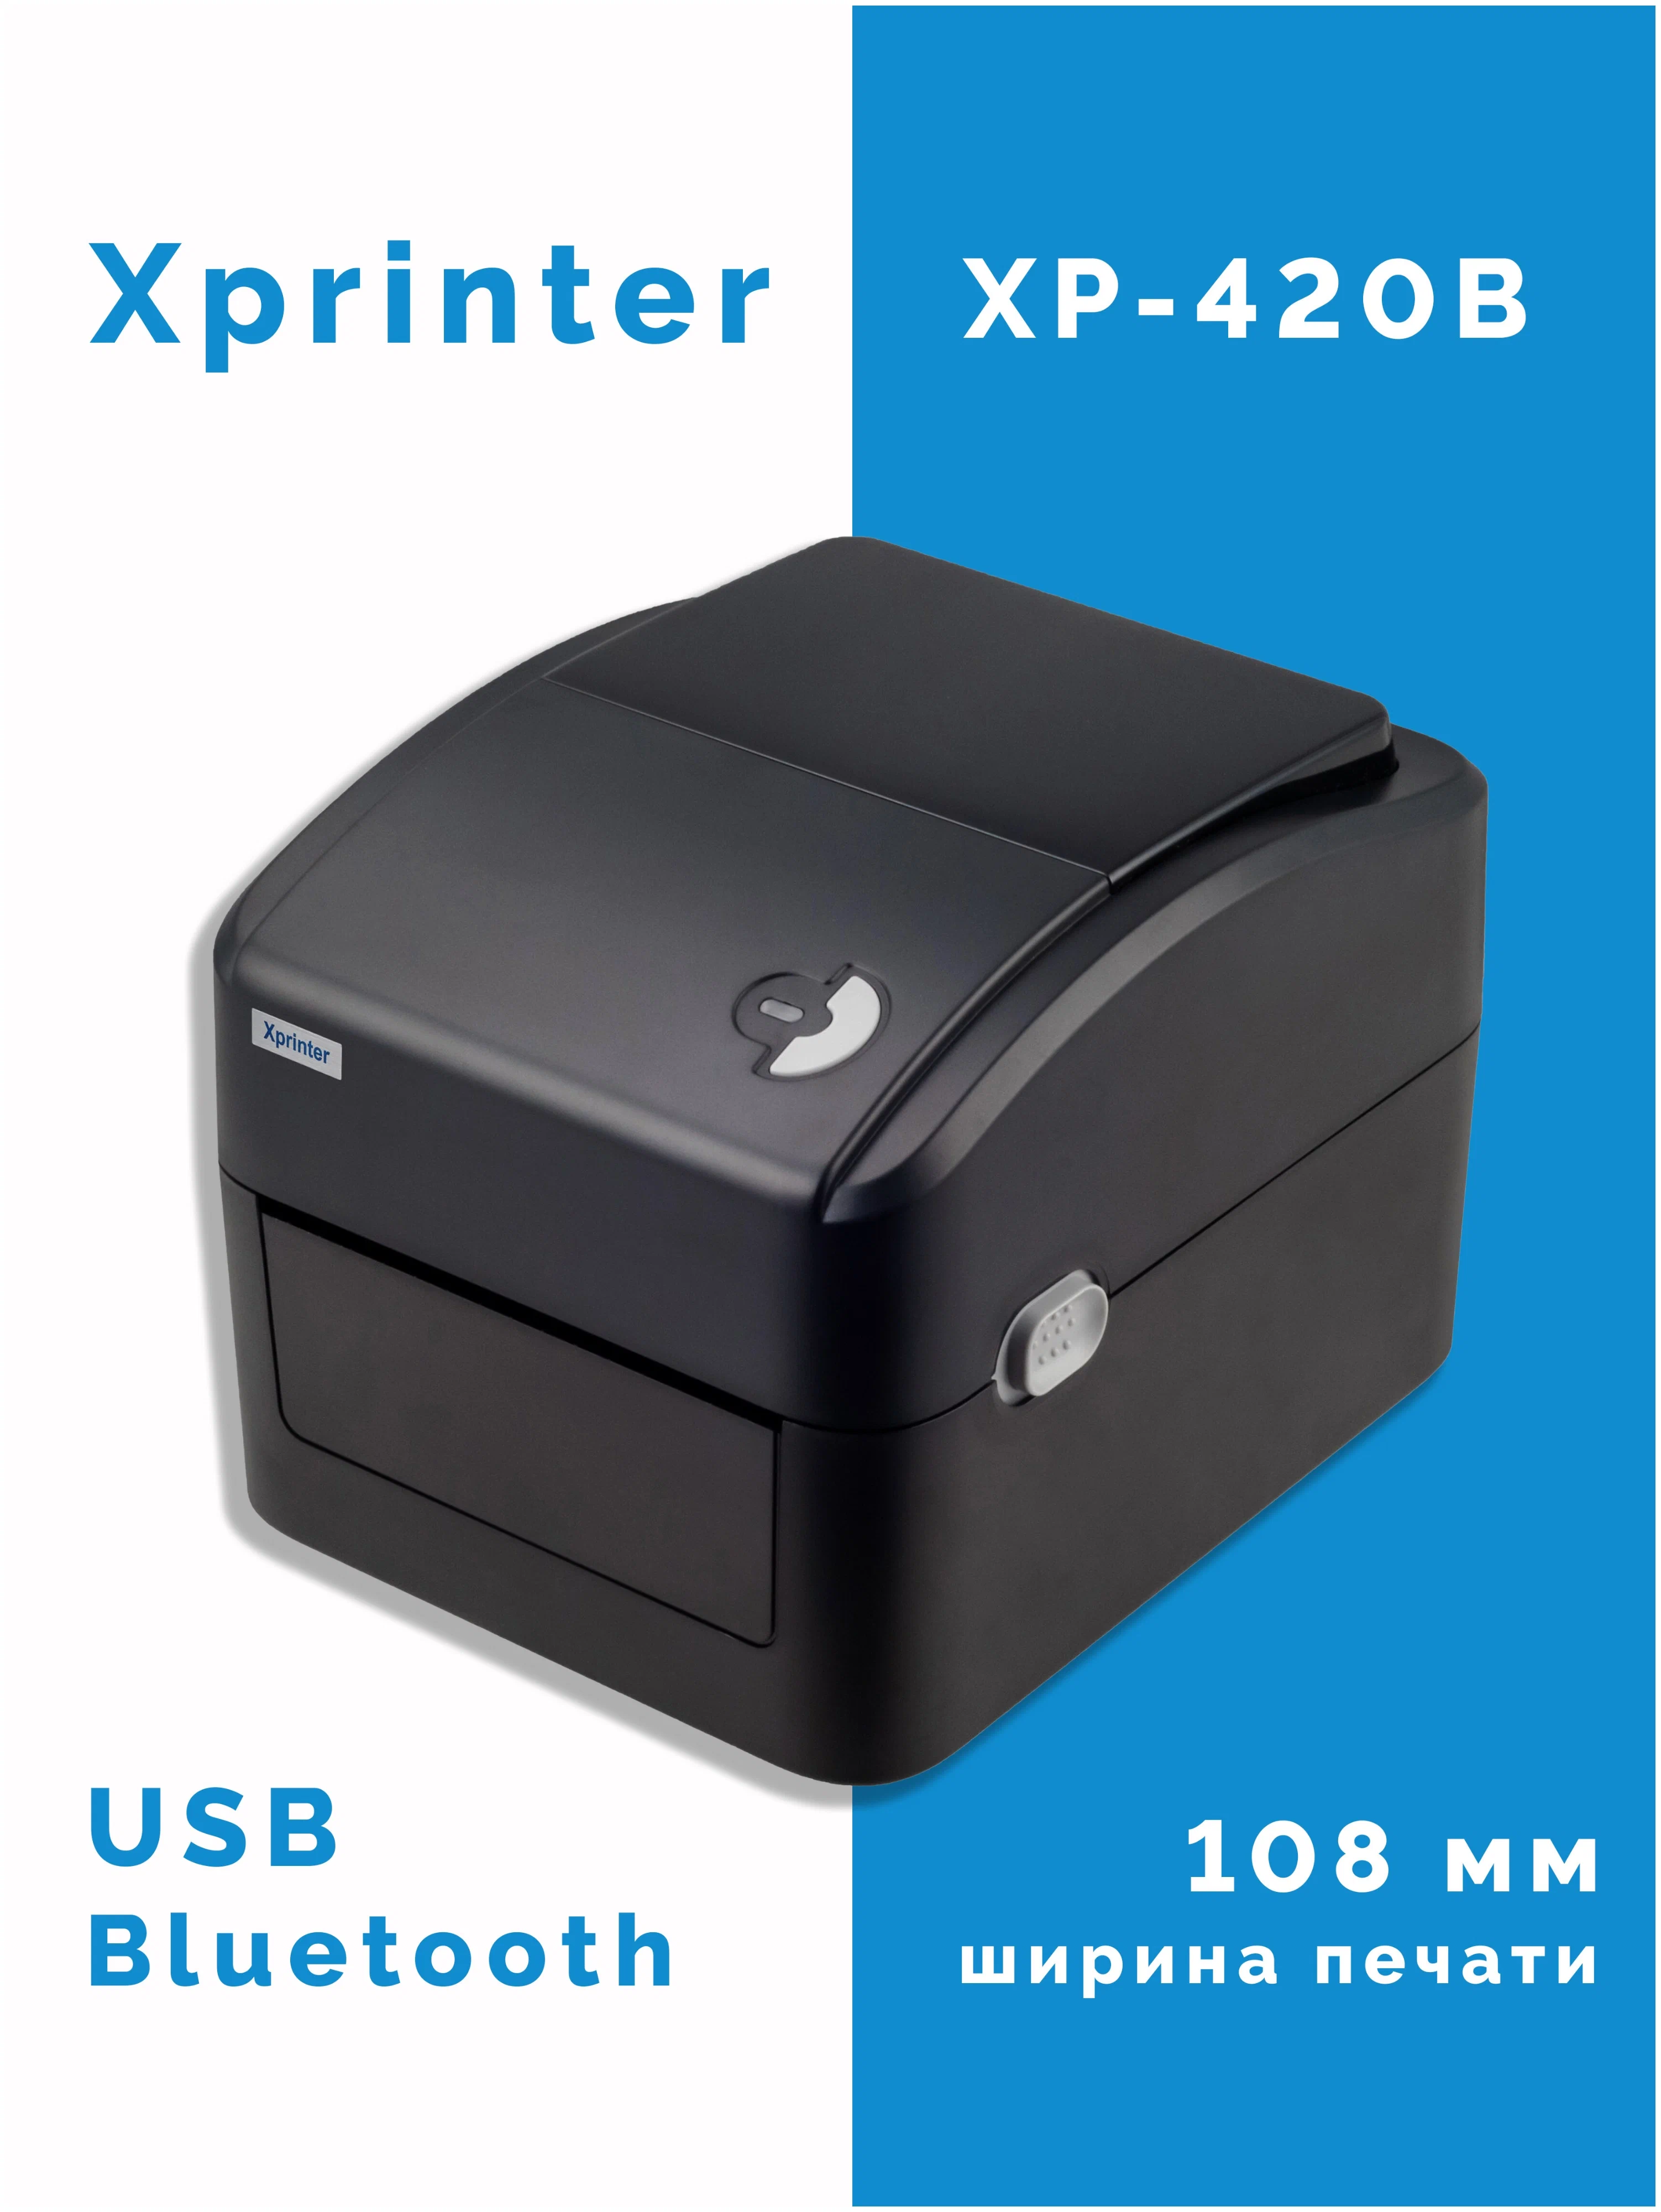 Xprinter XP-420B black USB + Bluethooth - разрешение печати: 203 dpi